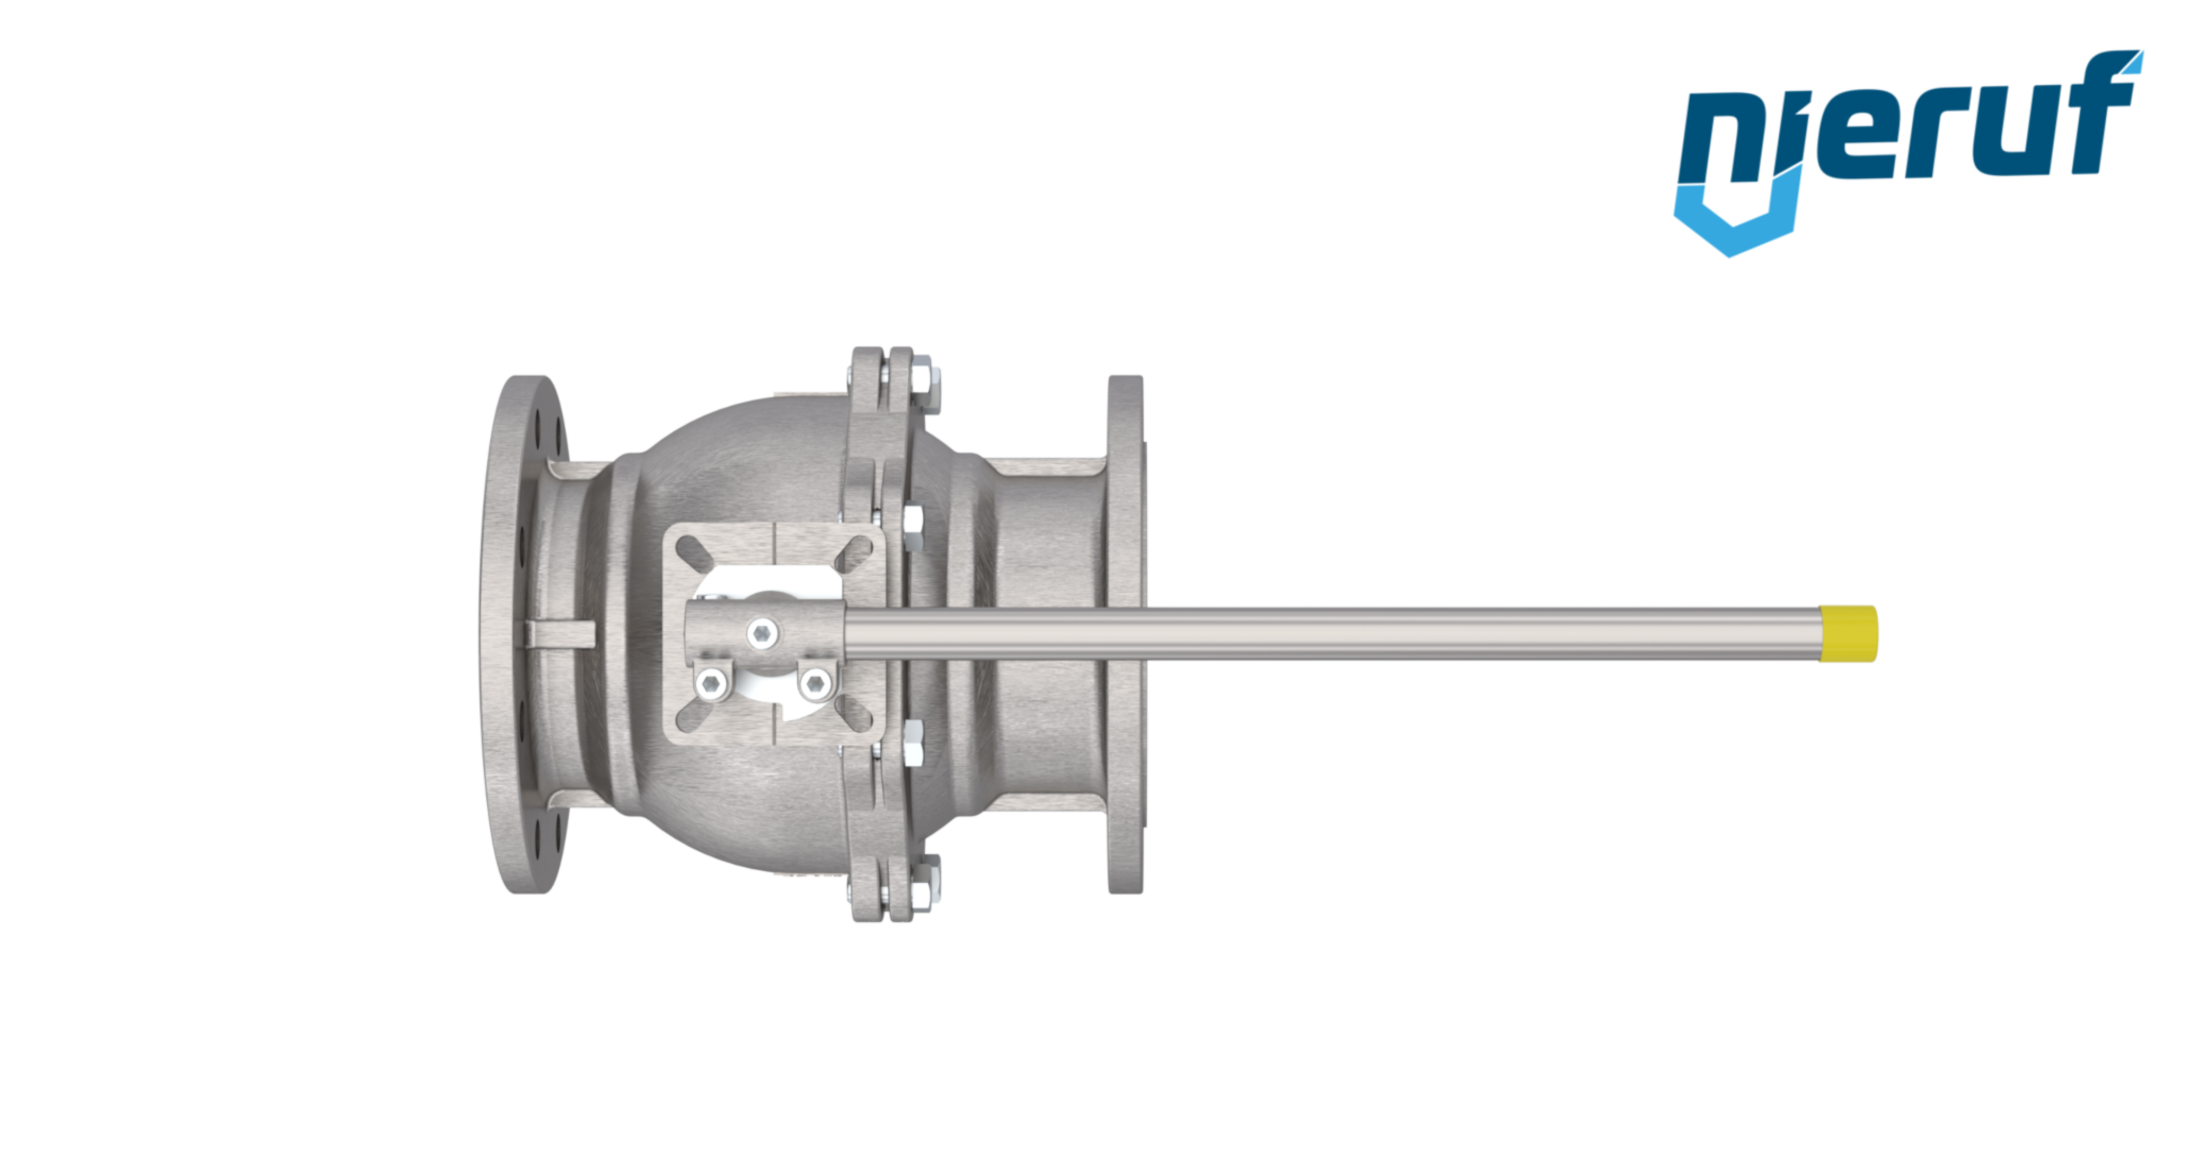 Steam-flange ball valve DN100 FK05 stainless steel 1.4408